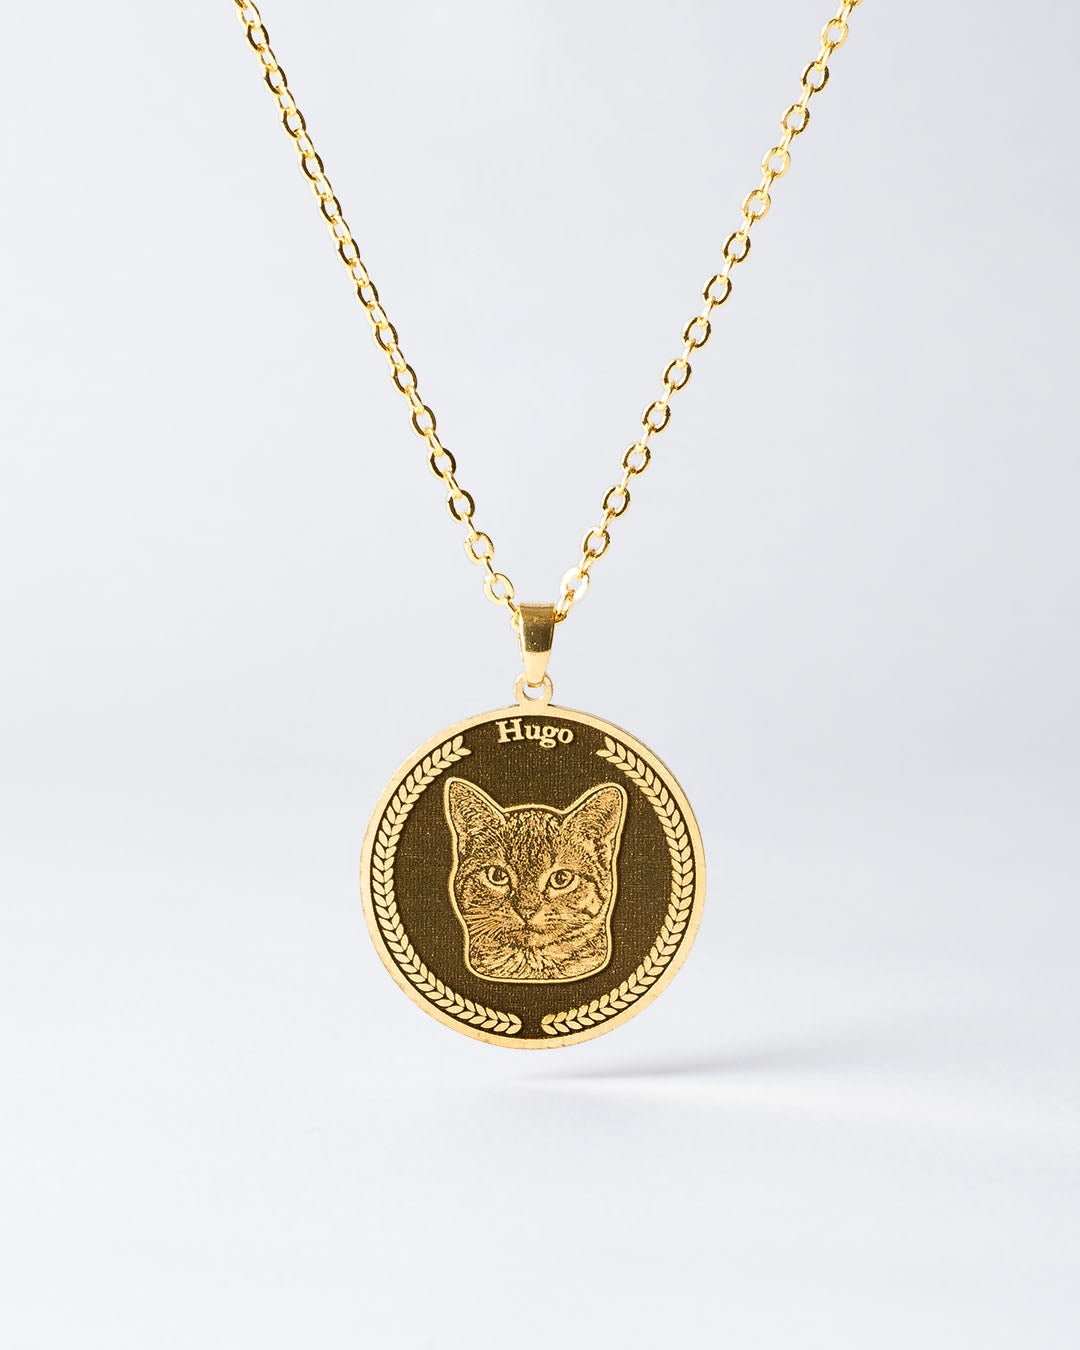 Pet memorial gifts, Gold medallion cat memorial necklace